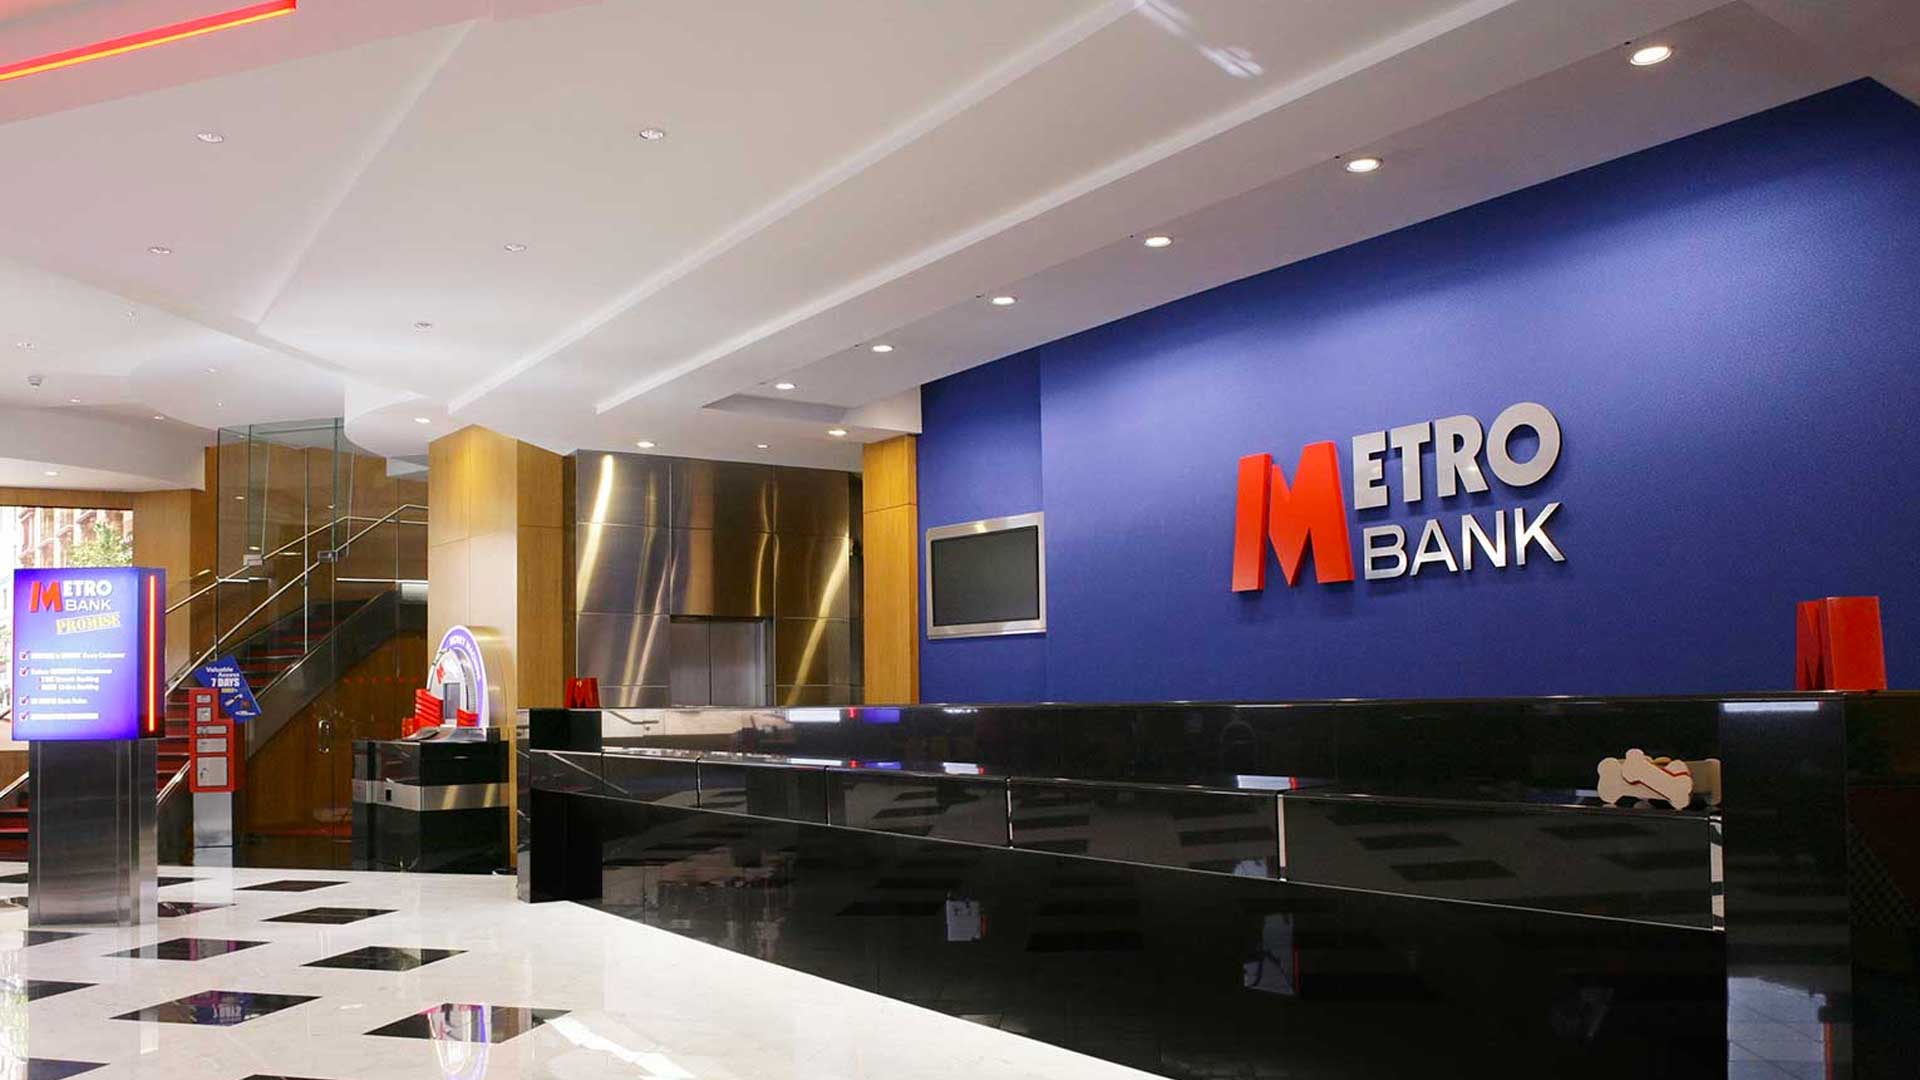 Metro Bank interior with bank logo and desk